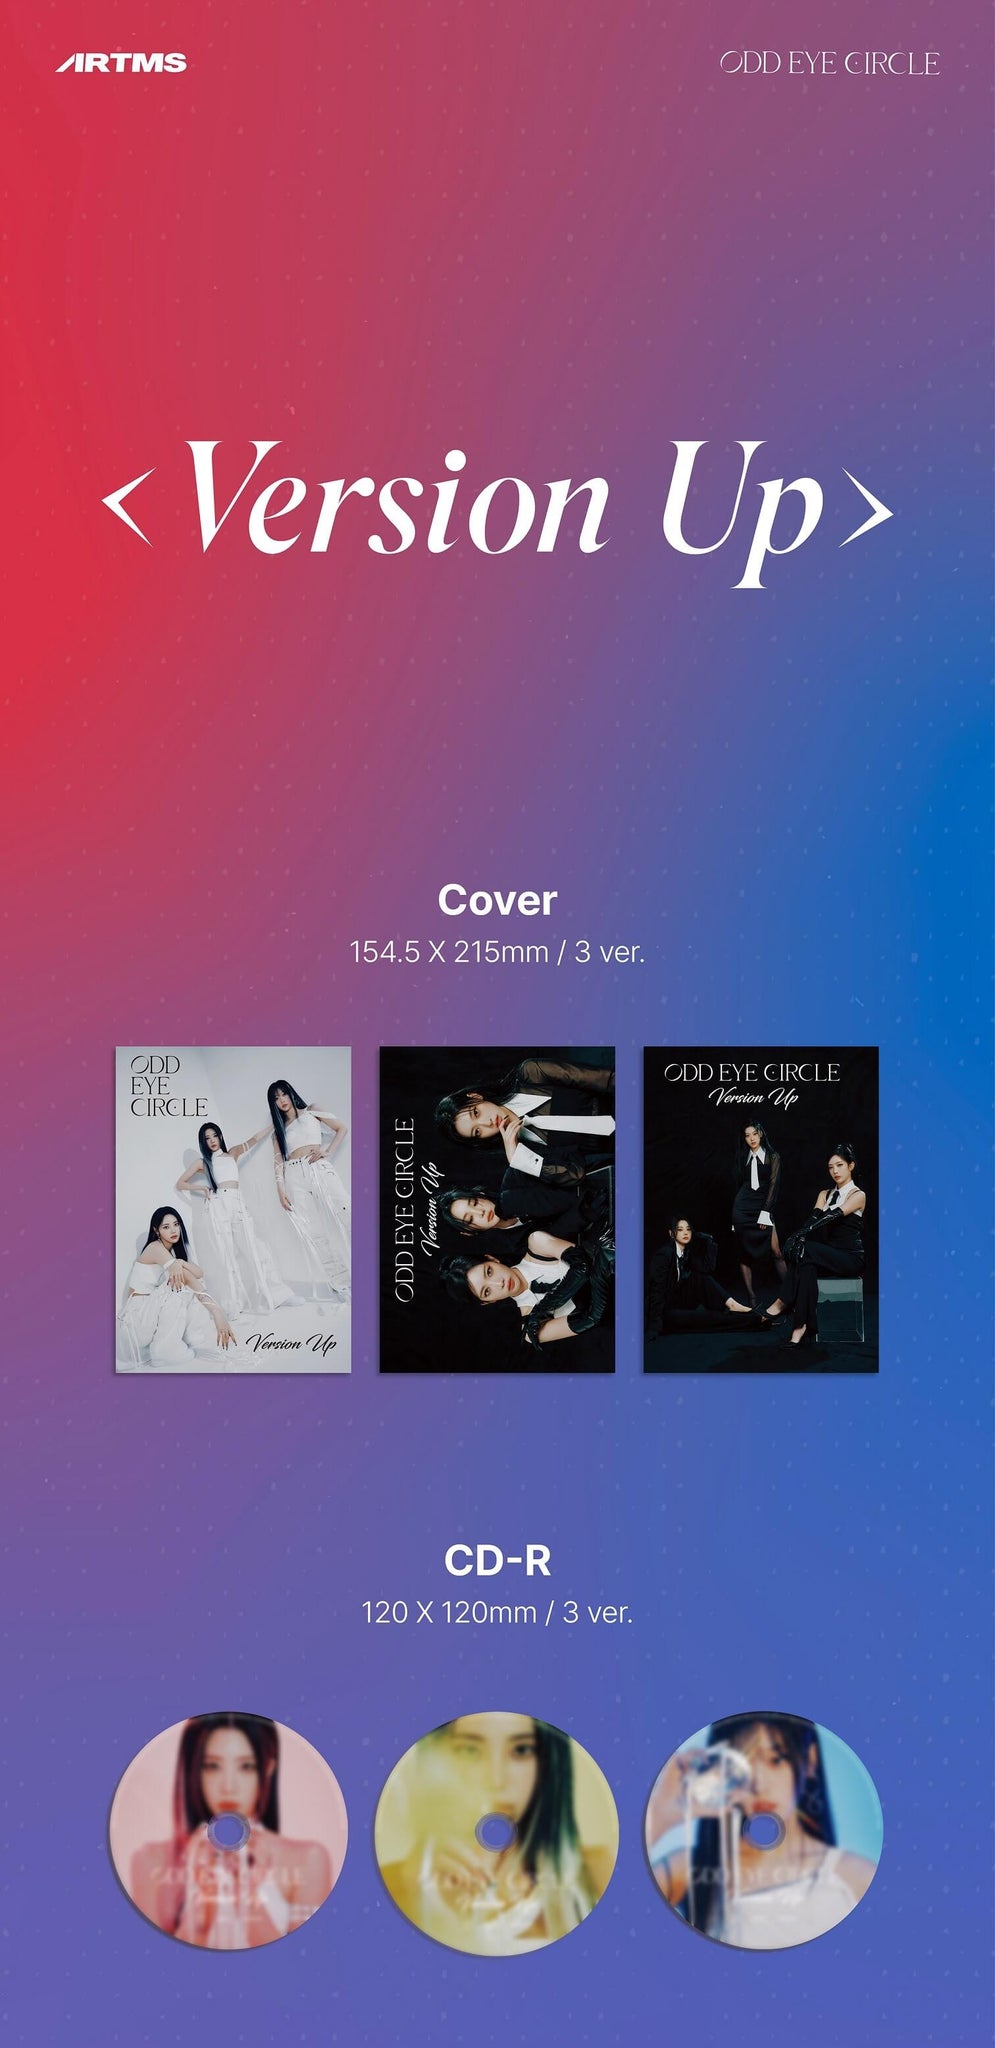 ODD EYE CIRCLE Mini Album Version Up Inclusions Cover CD